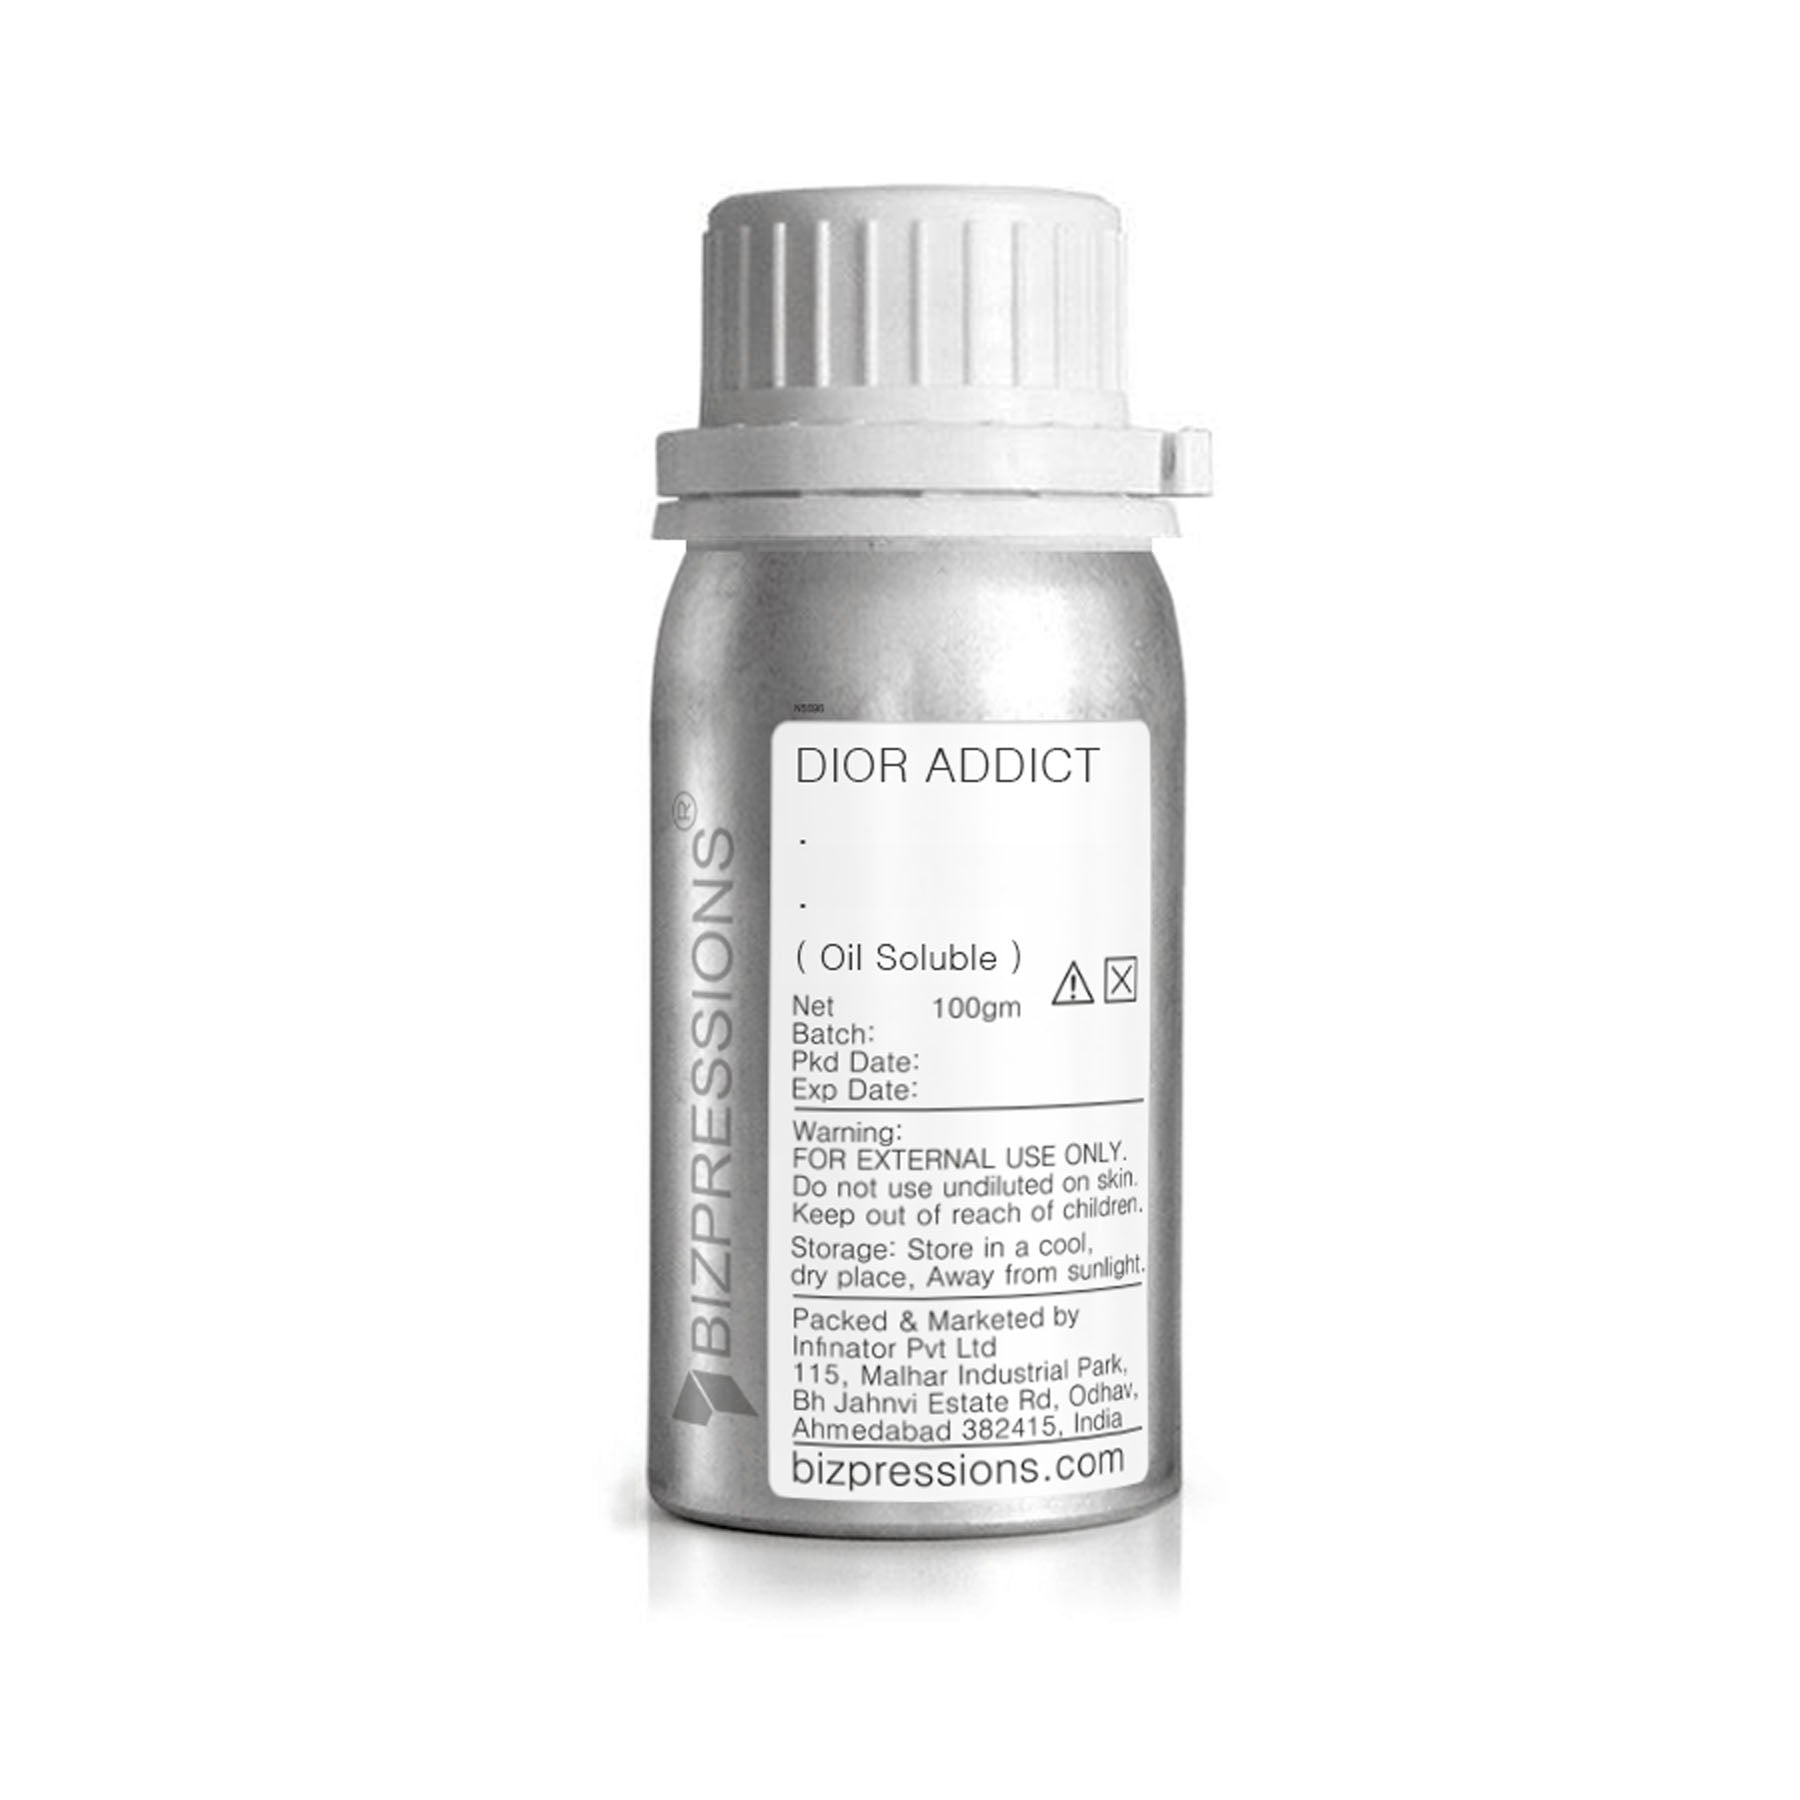 DIOR ADDICT - Fragrance ( Oil Soluble ) - 100 gm